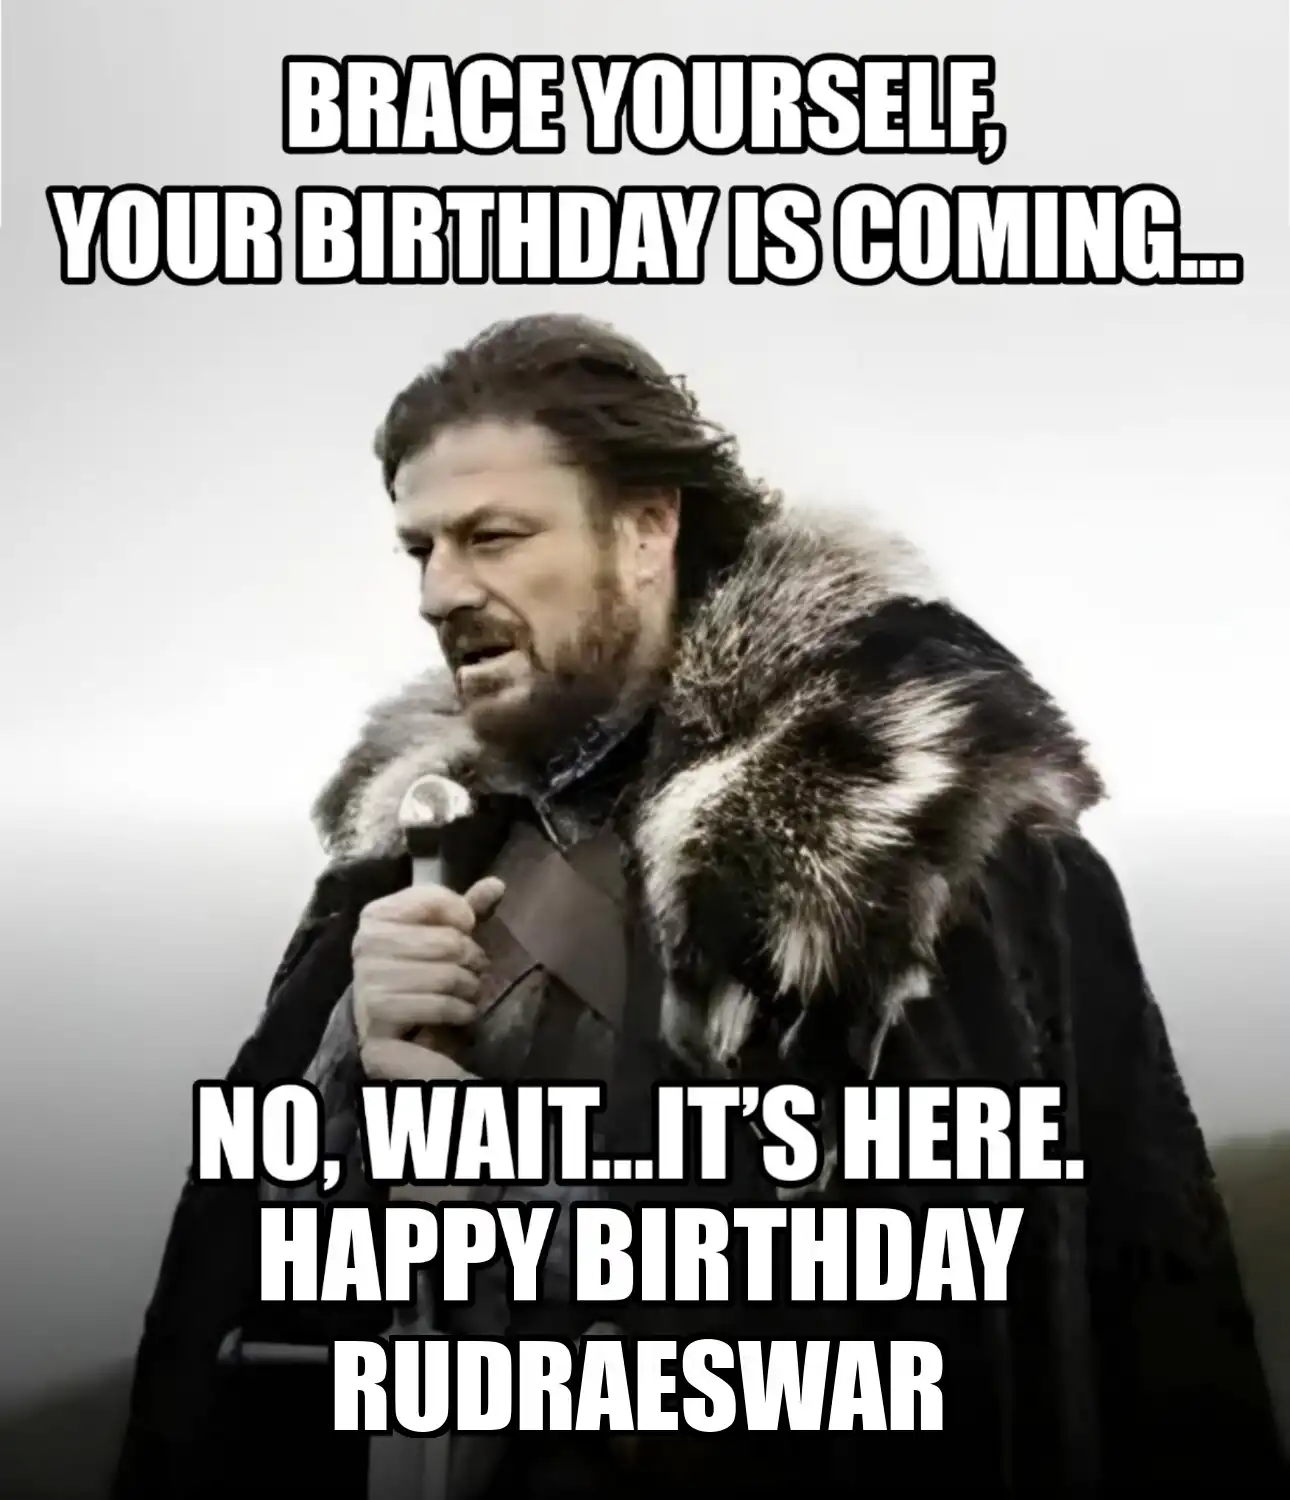 Happy Birthday Rudraeswar Brace Yourself Your Birthday Is Coming Meme